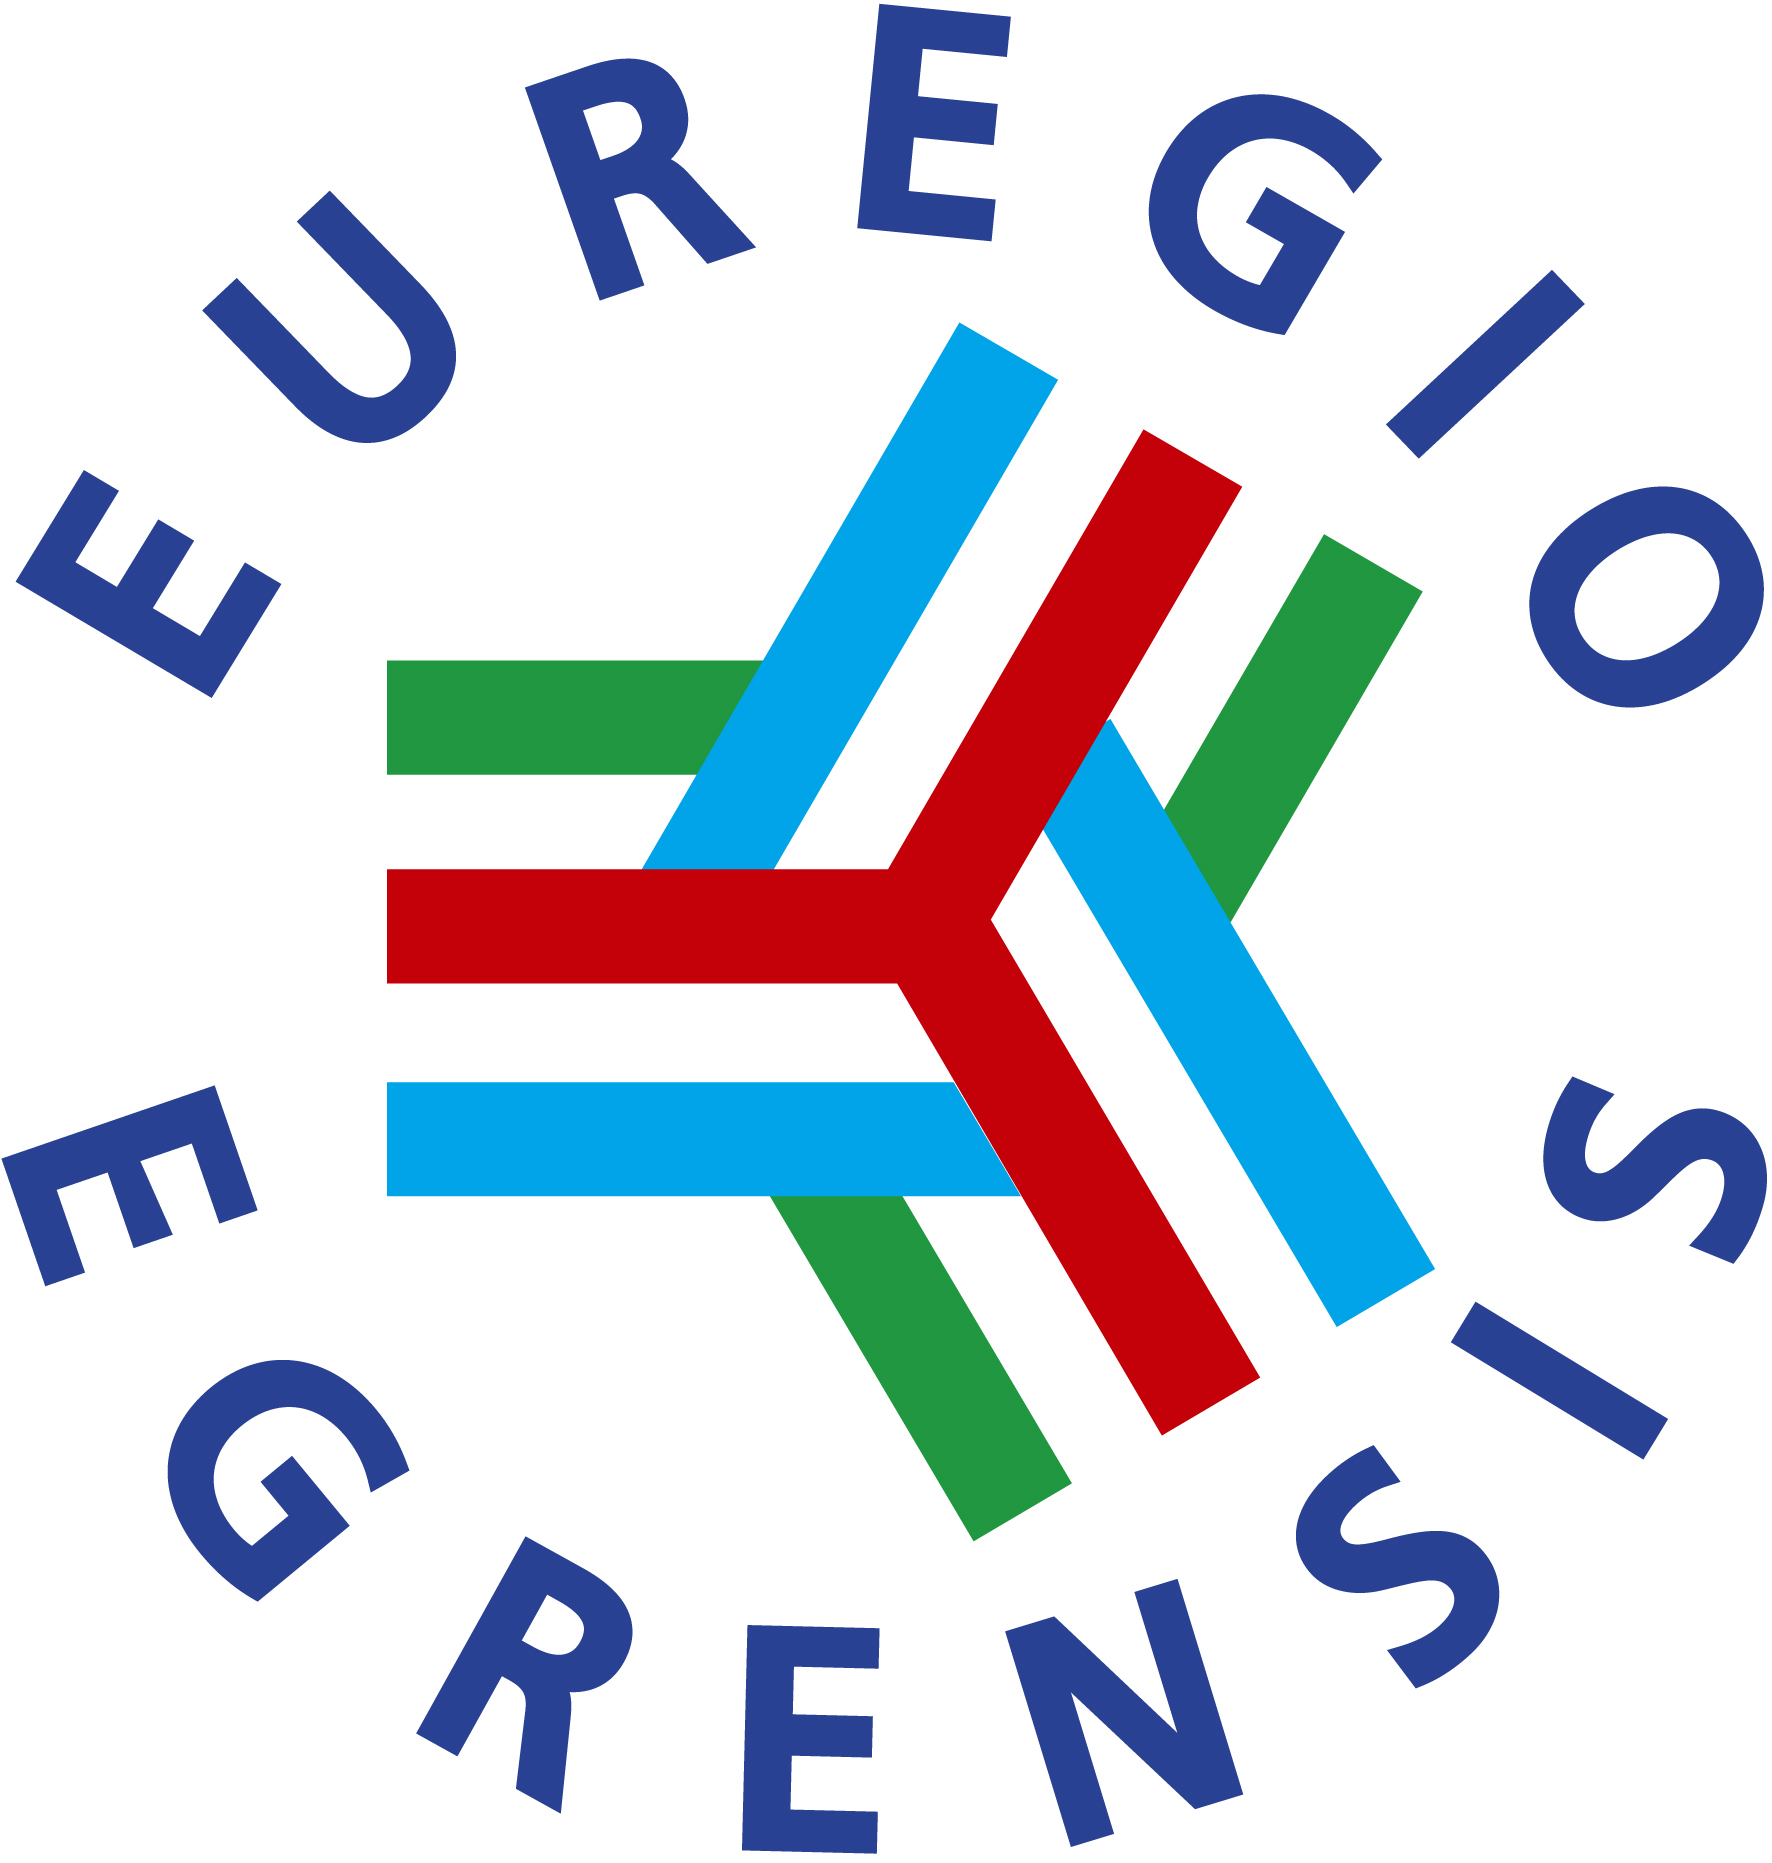 Logo Euregio Egrensis